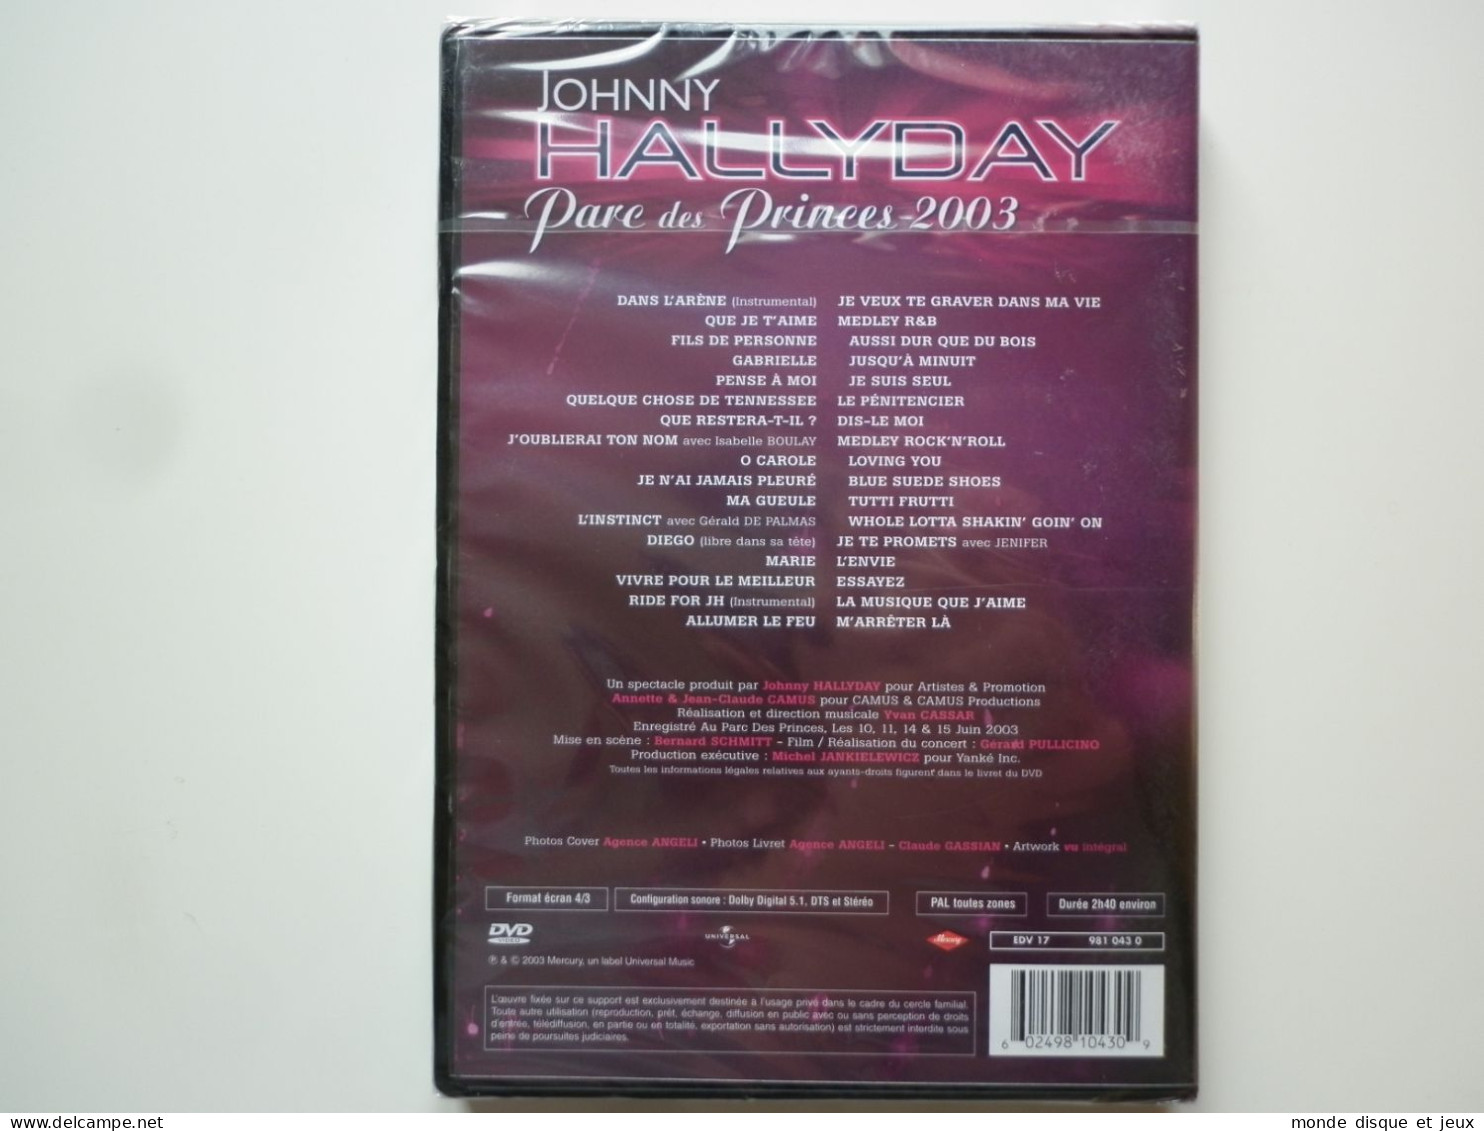 Johnny Hallyday Dvd Parc Des Princes 2003 - Musik-DVD's